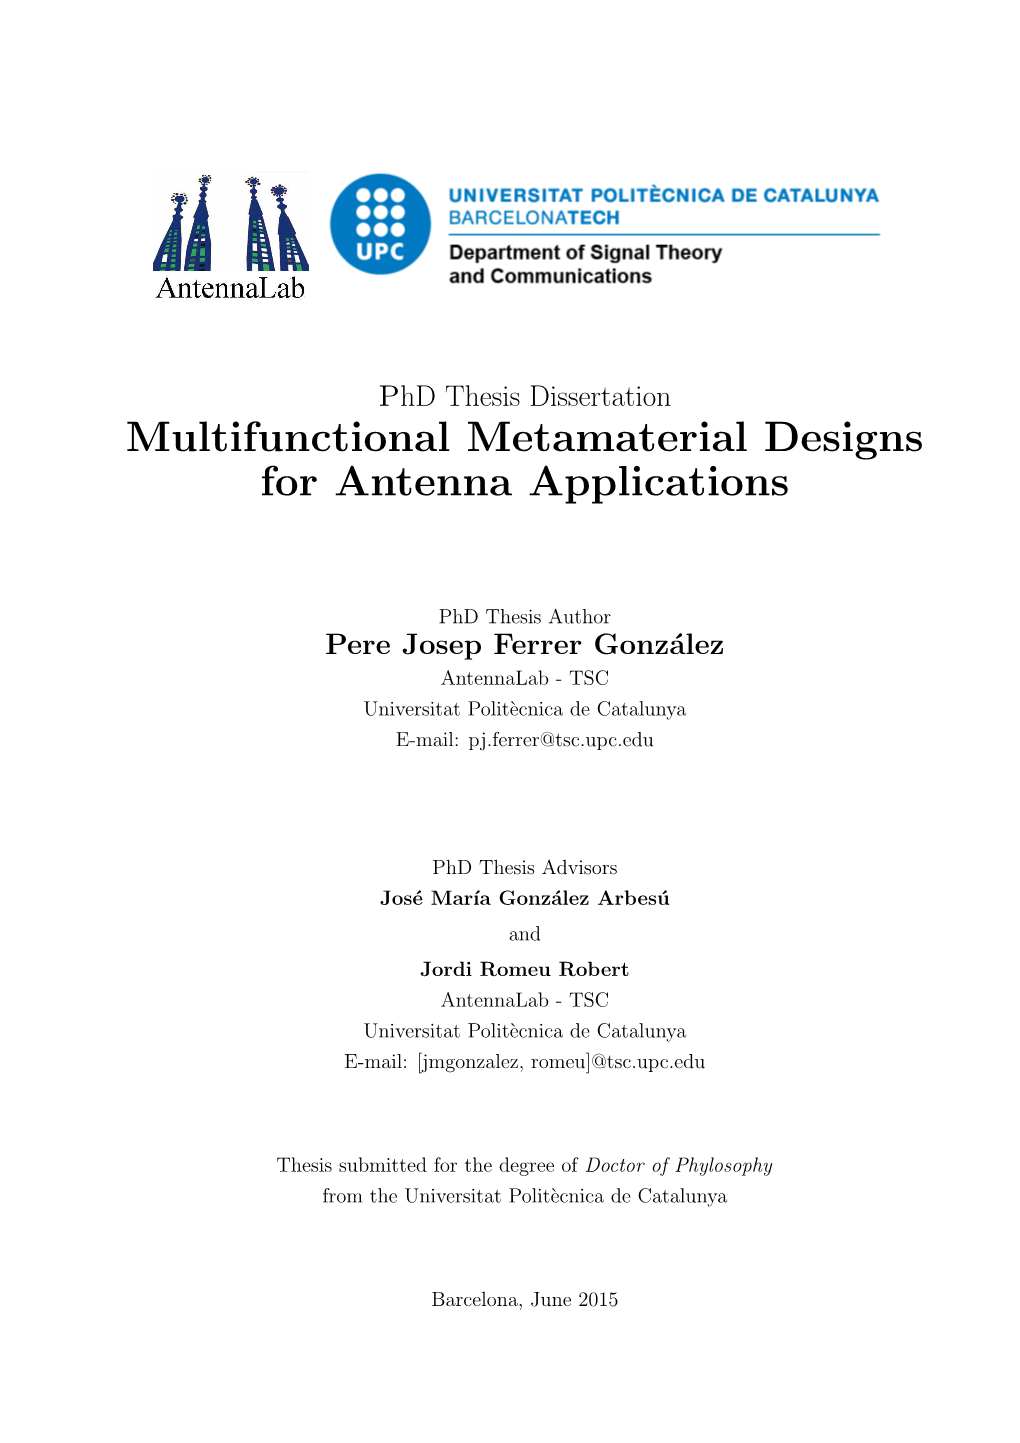 Multifunctional Metamaterial Designs for Antenna Applications